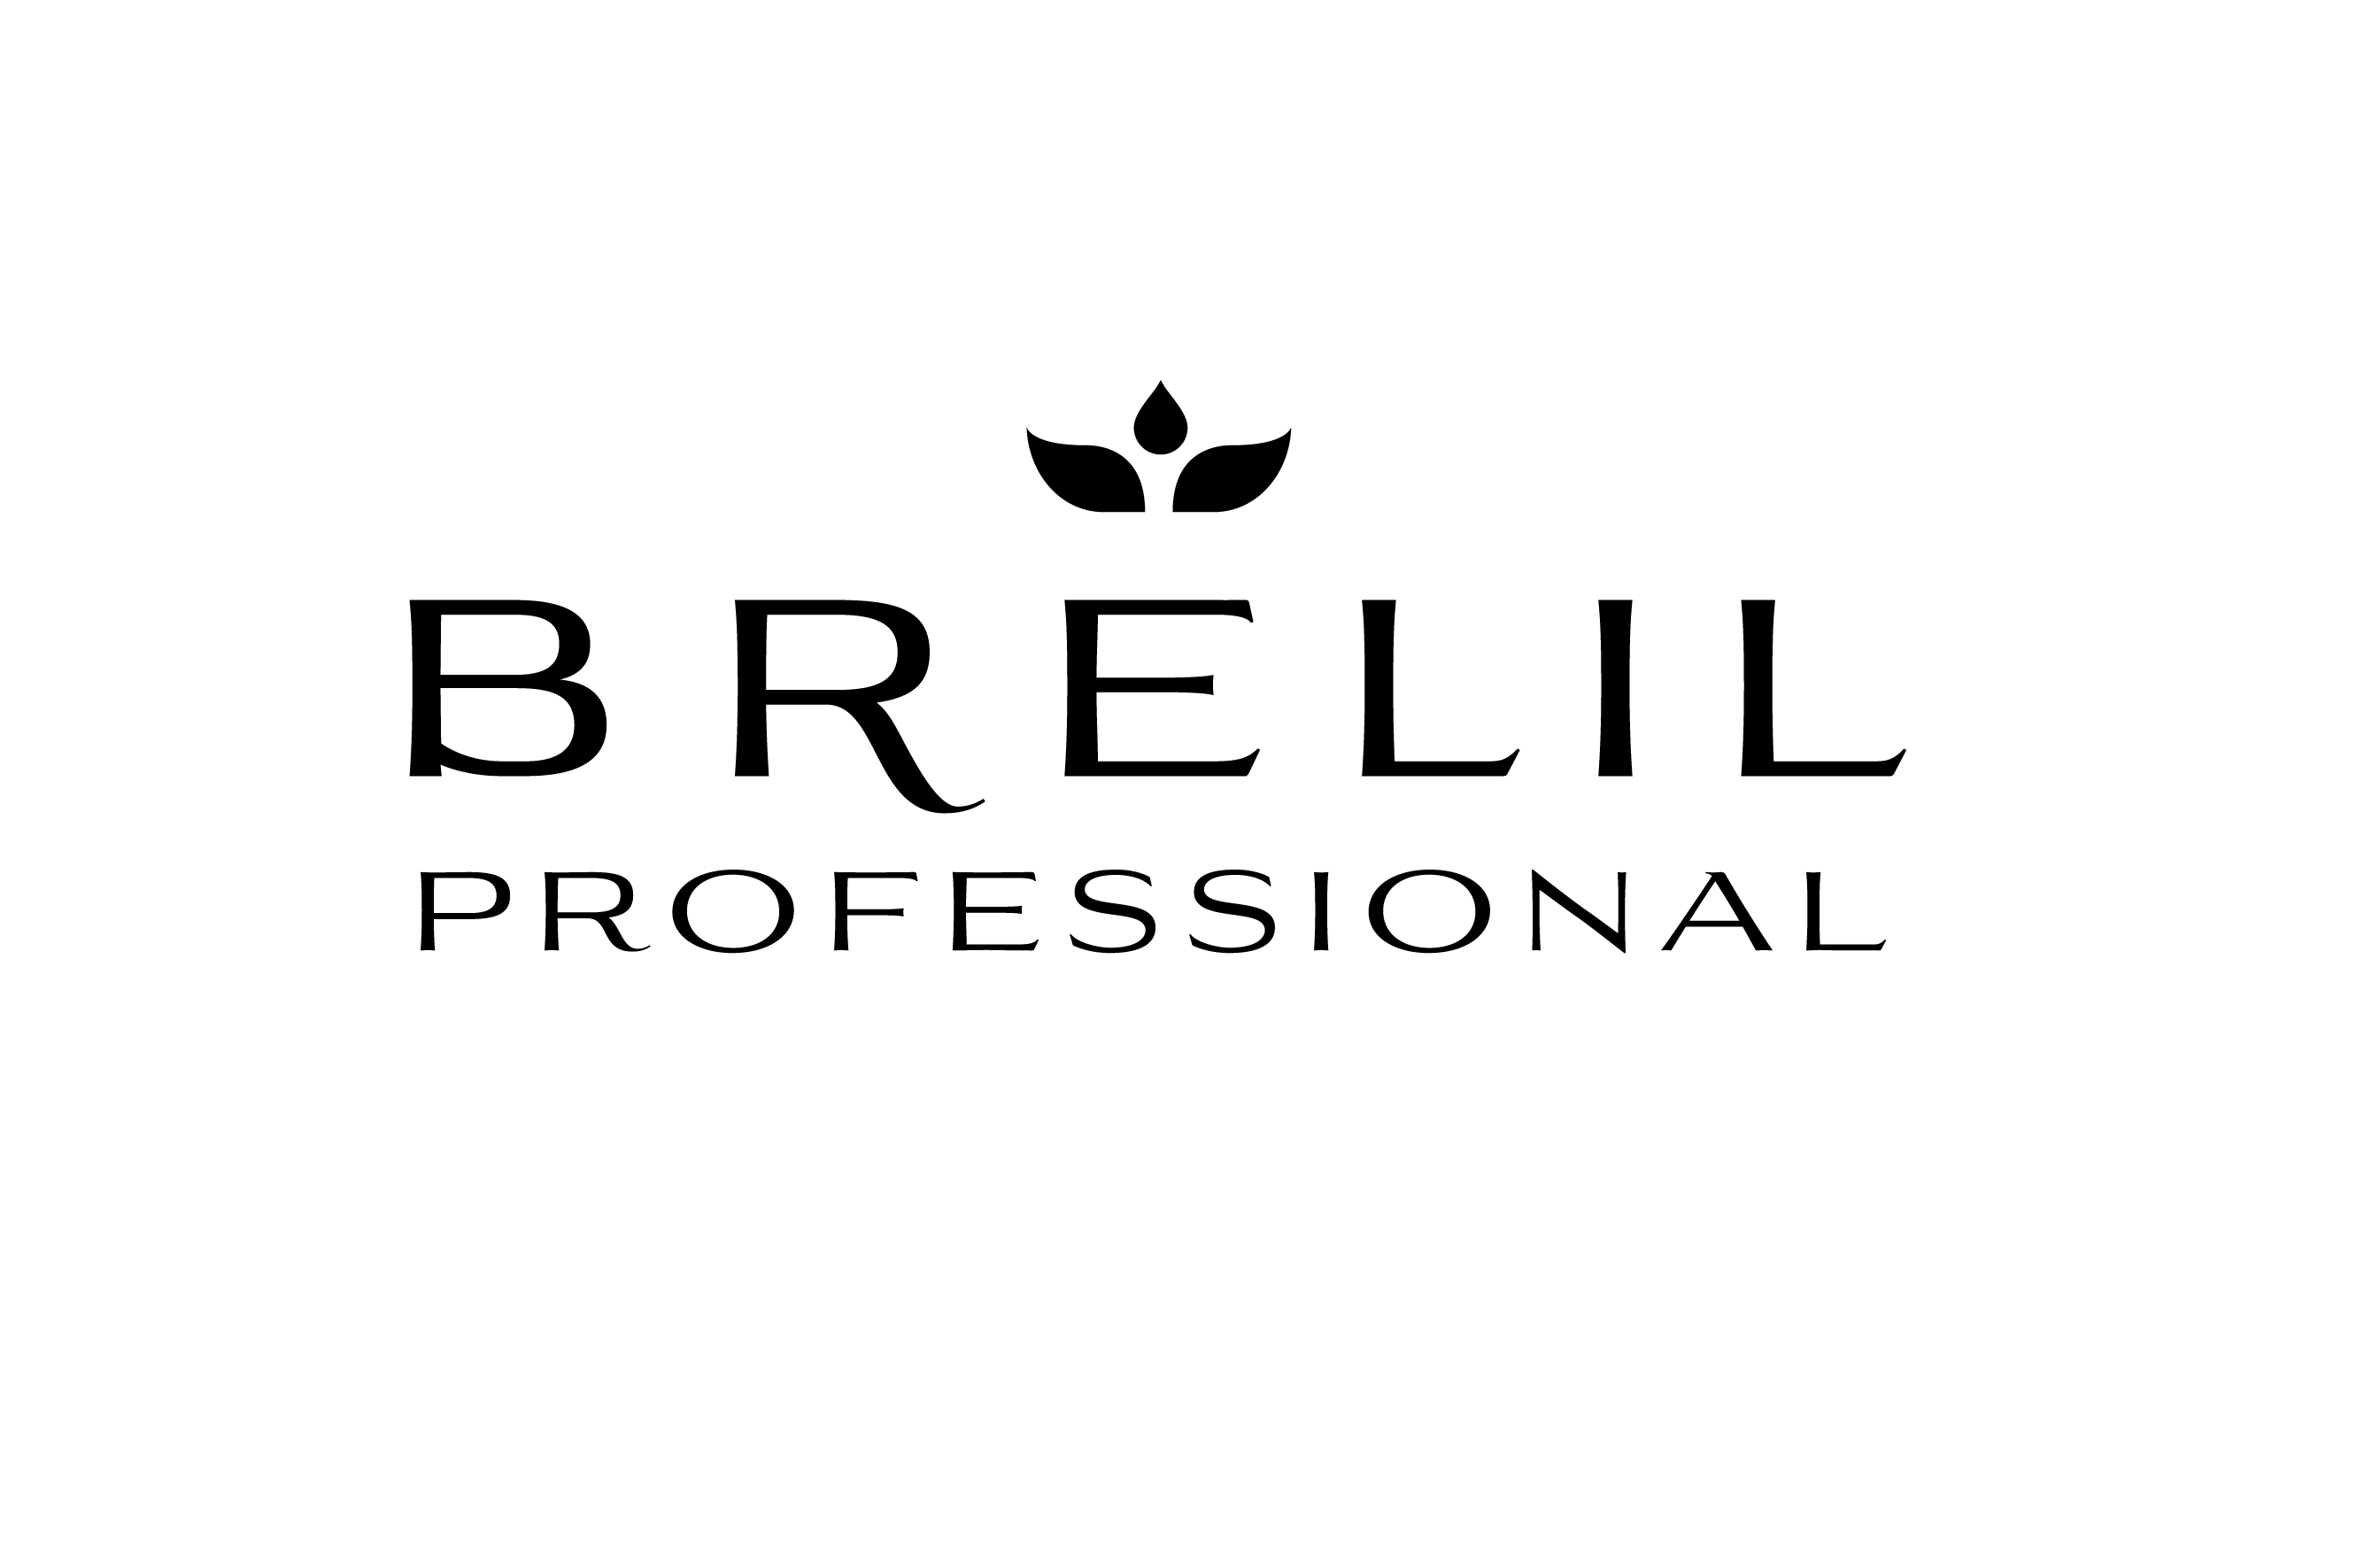 Brelil Professional